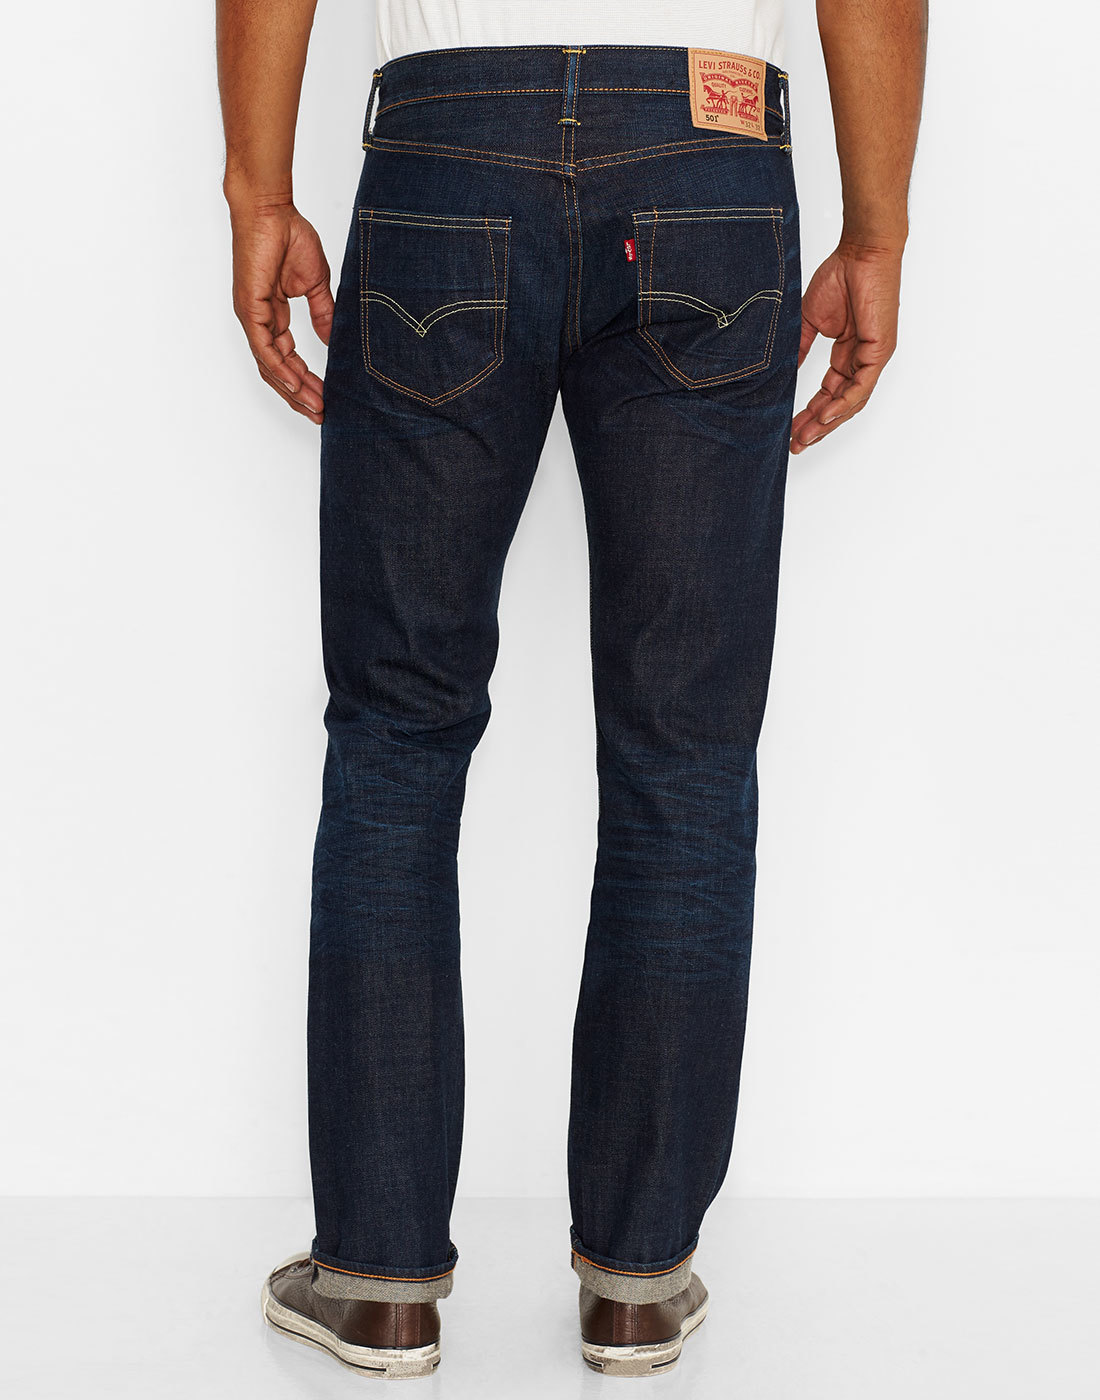 LEVI'S® 501 Retro Original Fit Straight Mens Jeans in Blue Lane